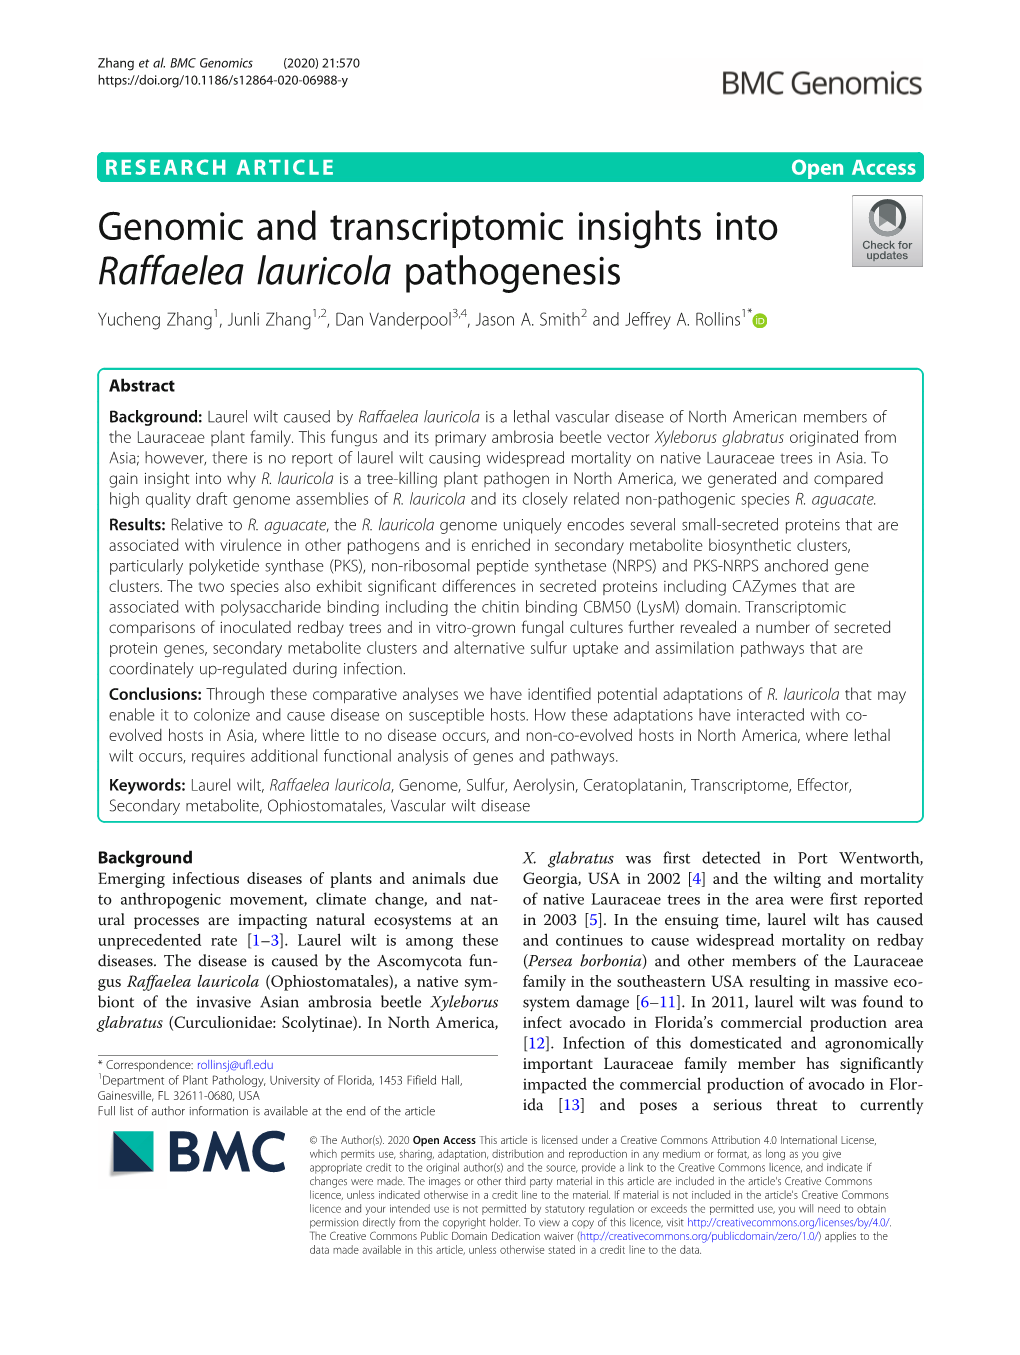 Genomic and Transcriptomic Insights Into Raffaelea Lauricola Pathogenesis Yucheng Zhang1, Junli Zhang1,2, Dan Vanderpool3,4, Jason A